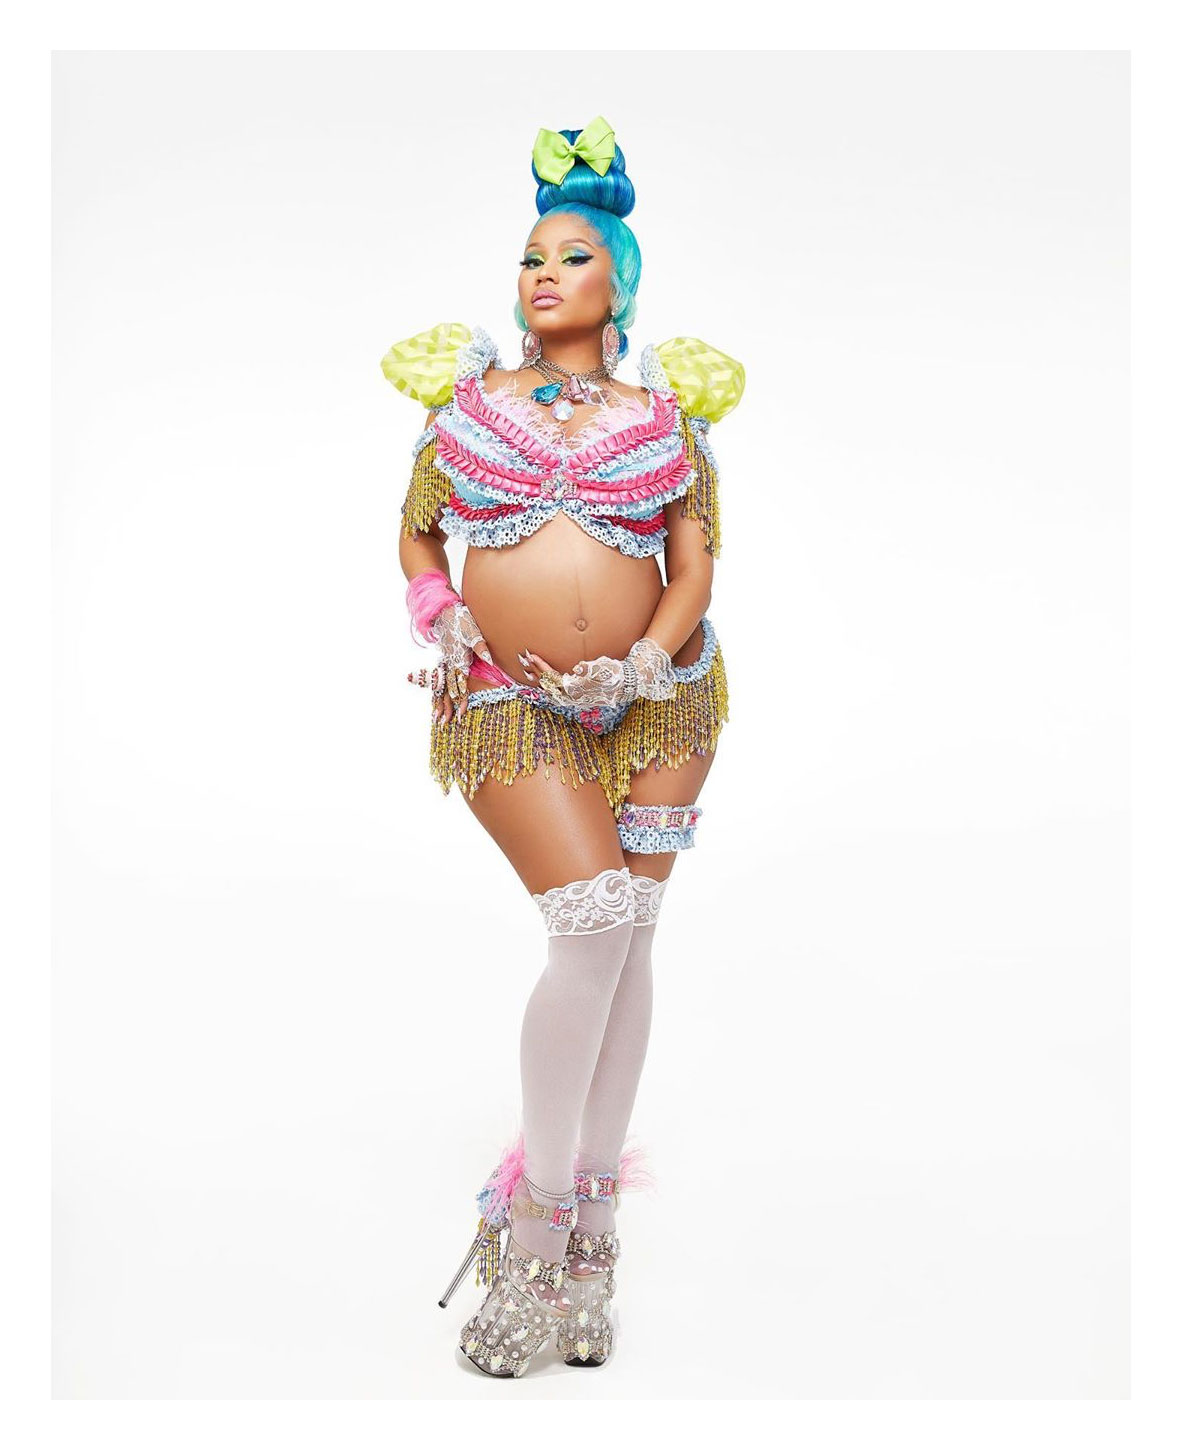 Real Naked Nicki Minaj Porn - Nicki Minaj's Baby Bump Album: Pregnancy Pics Ahead of 1st Child